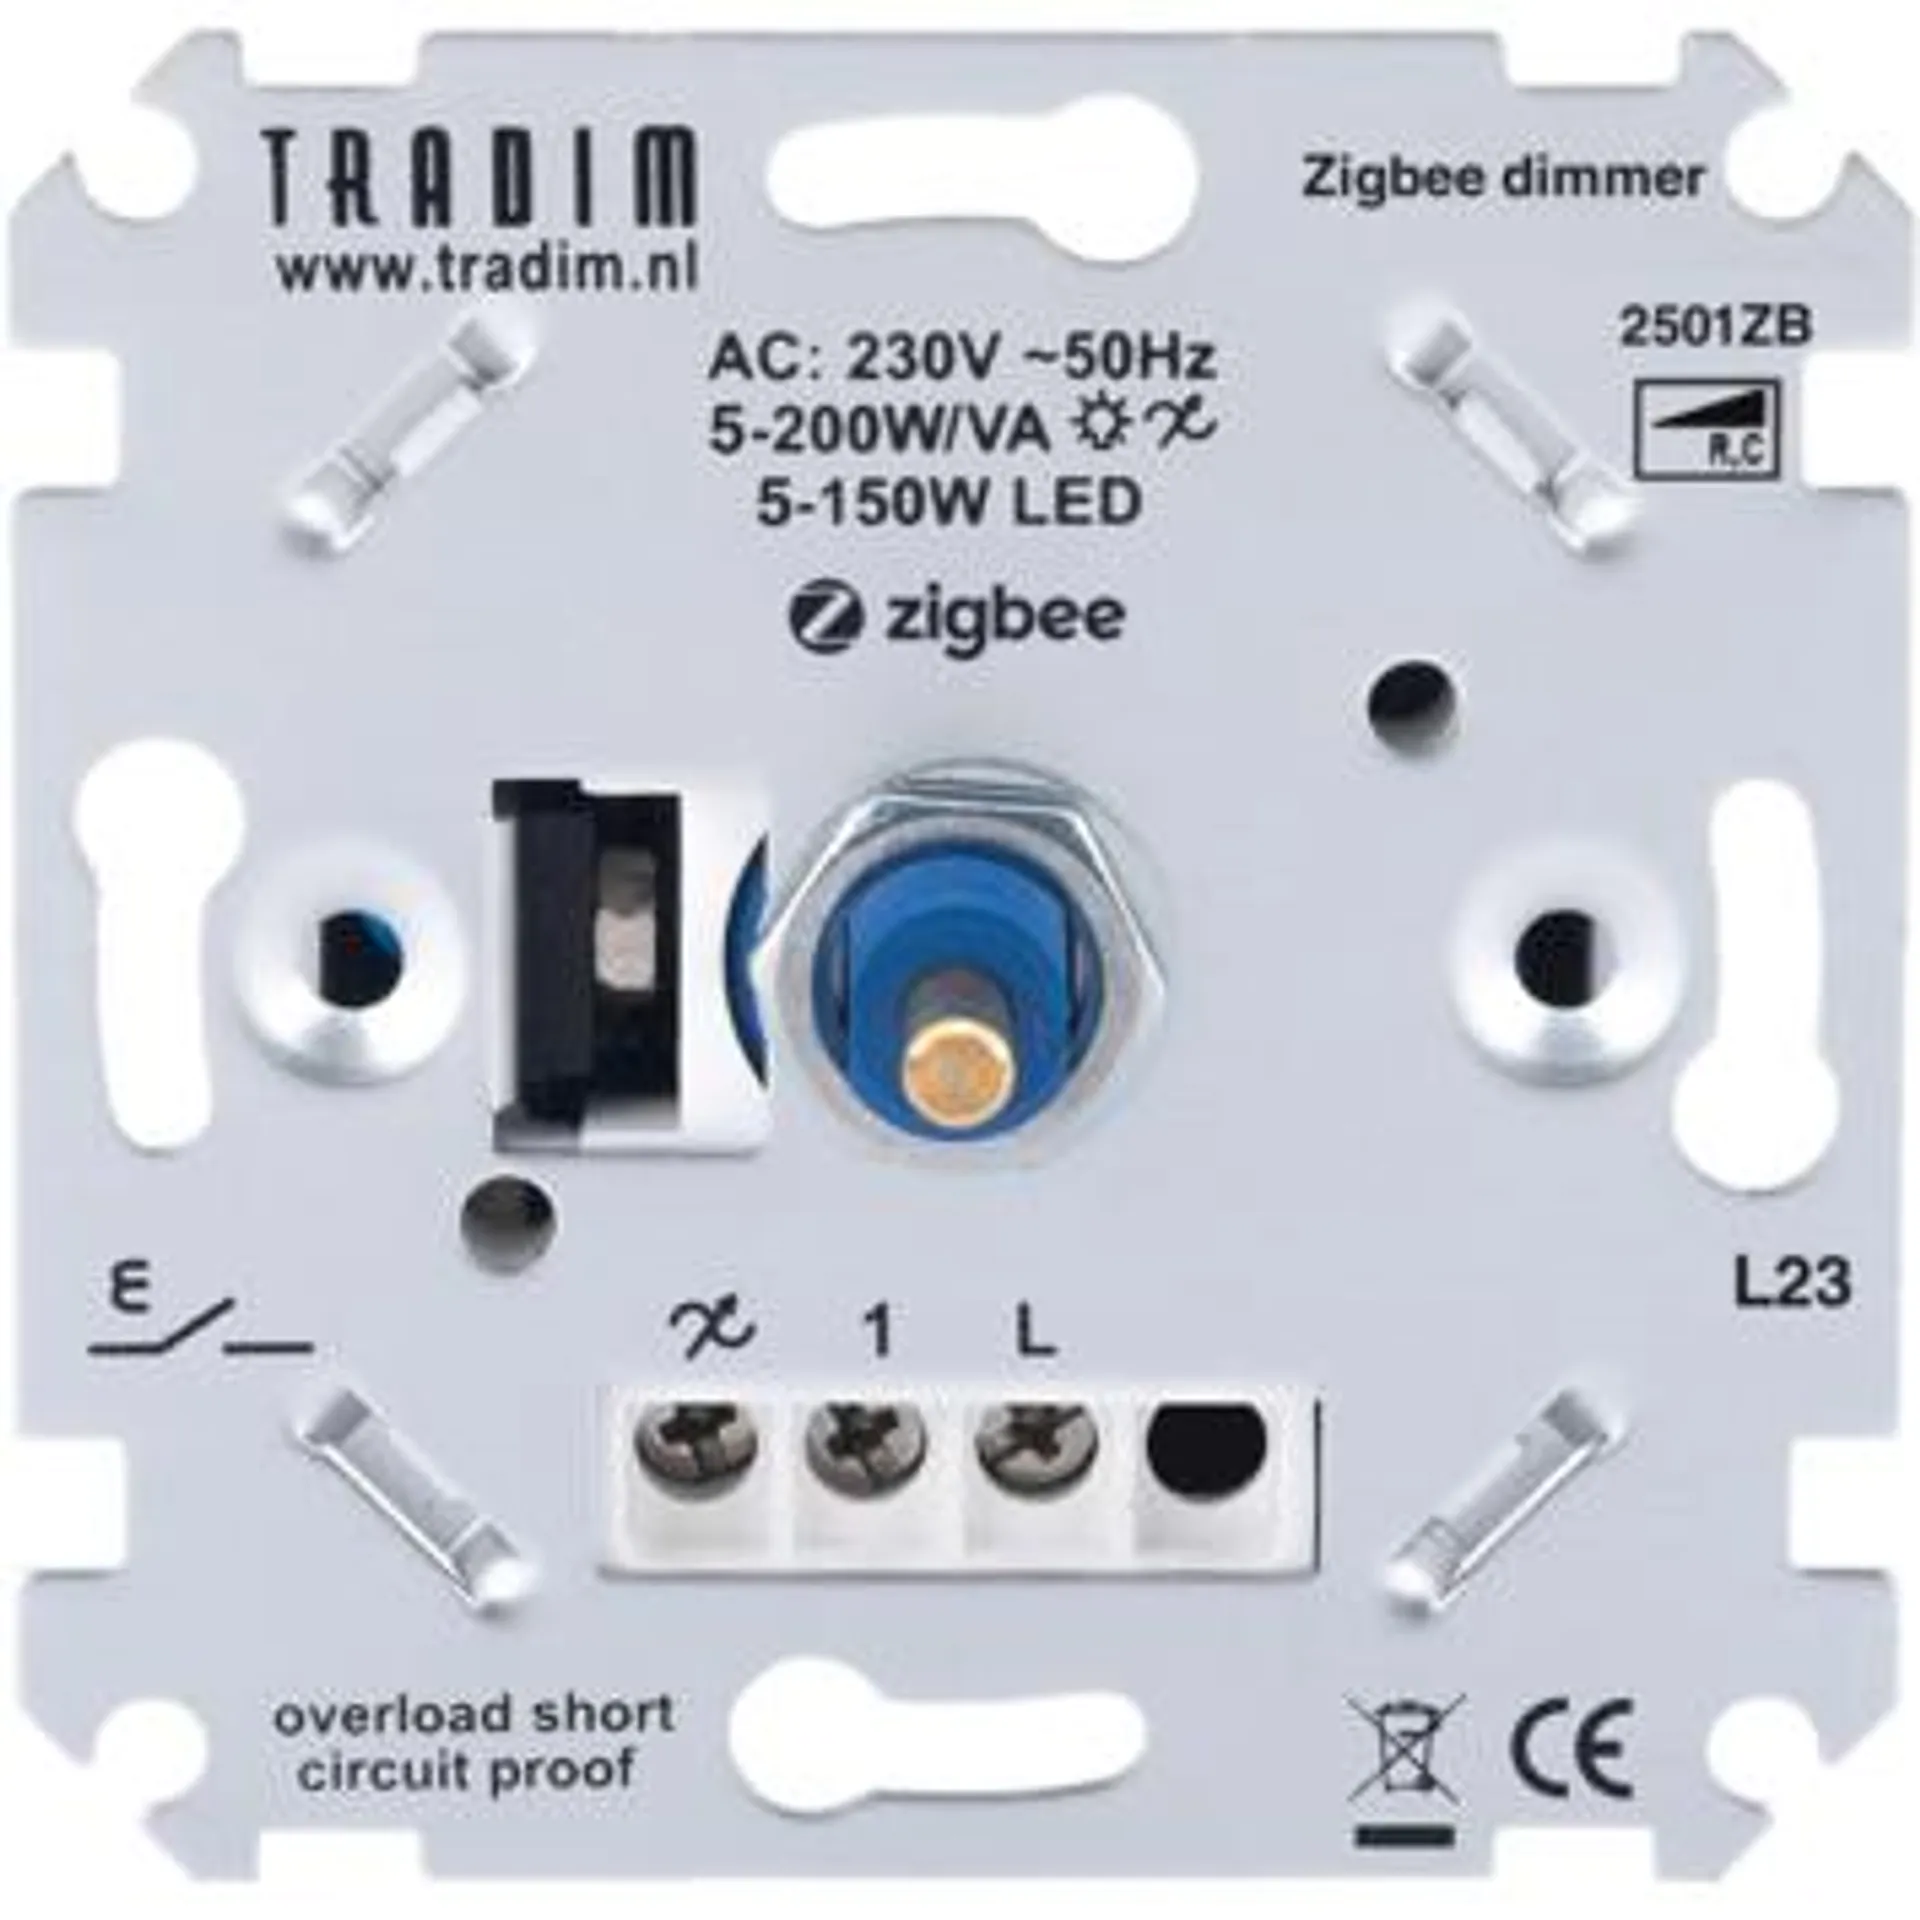 Tradim LED Smart muurdimmer Zigbee 5-200W